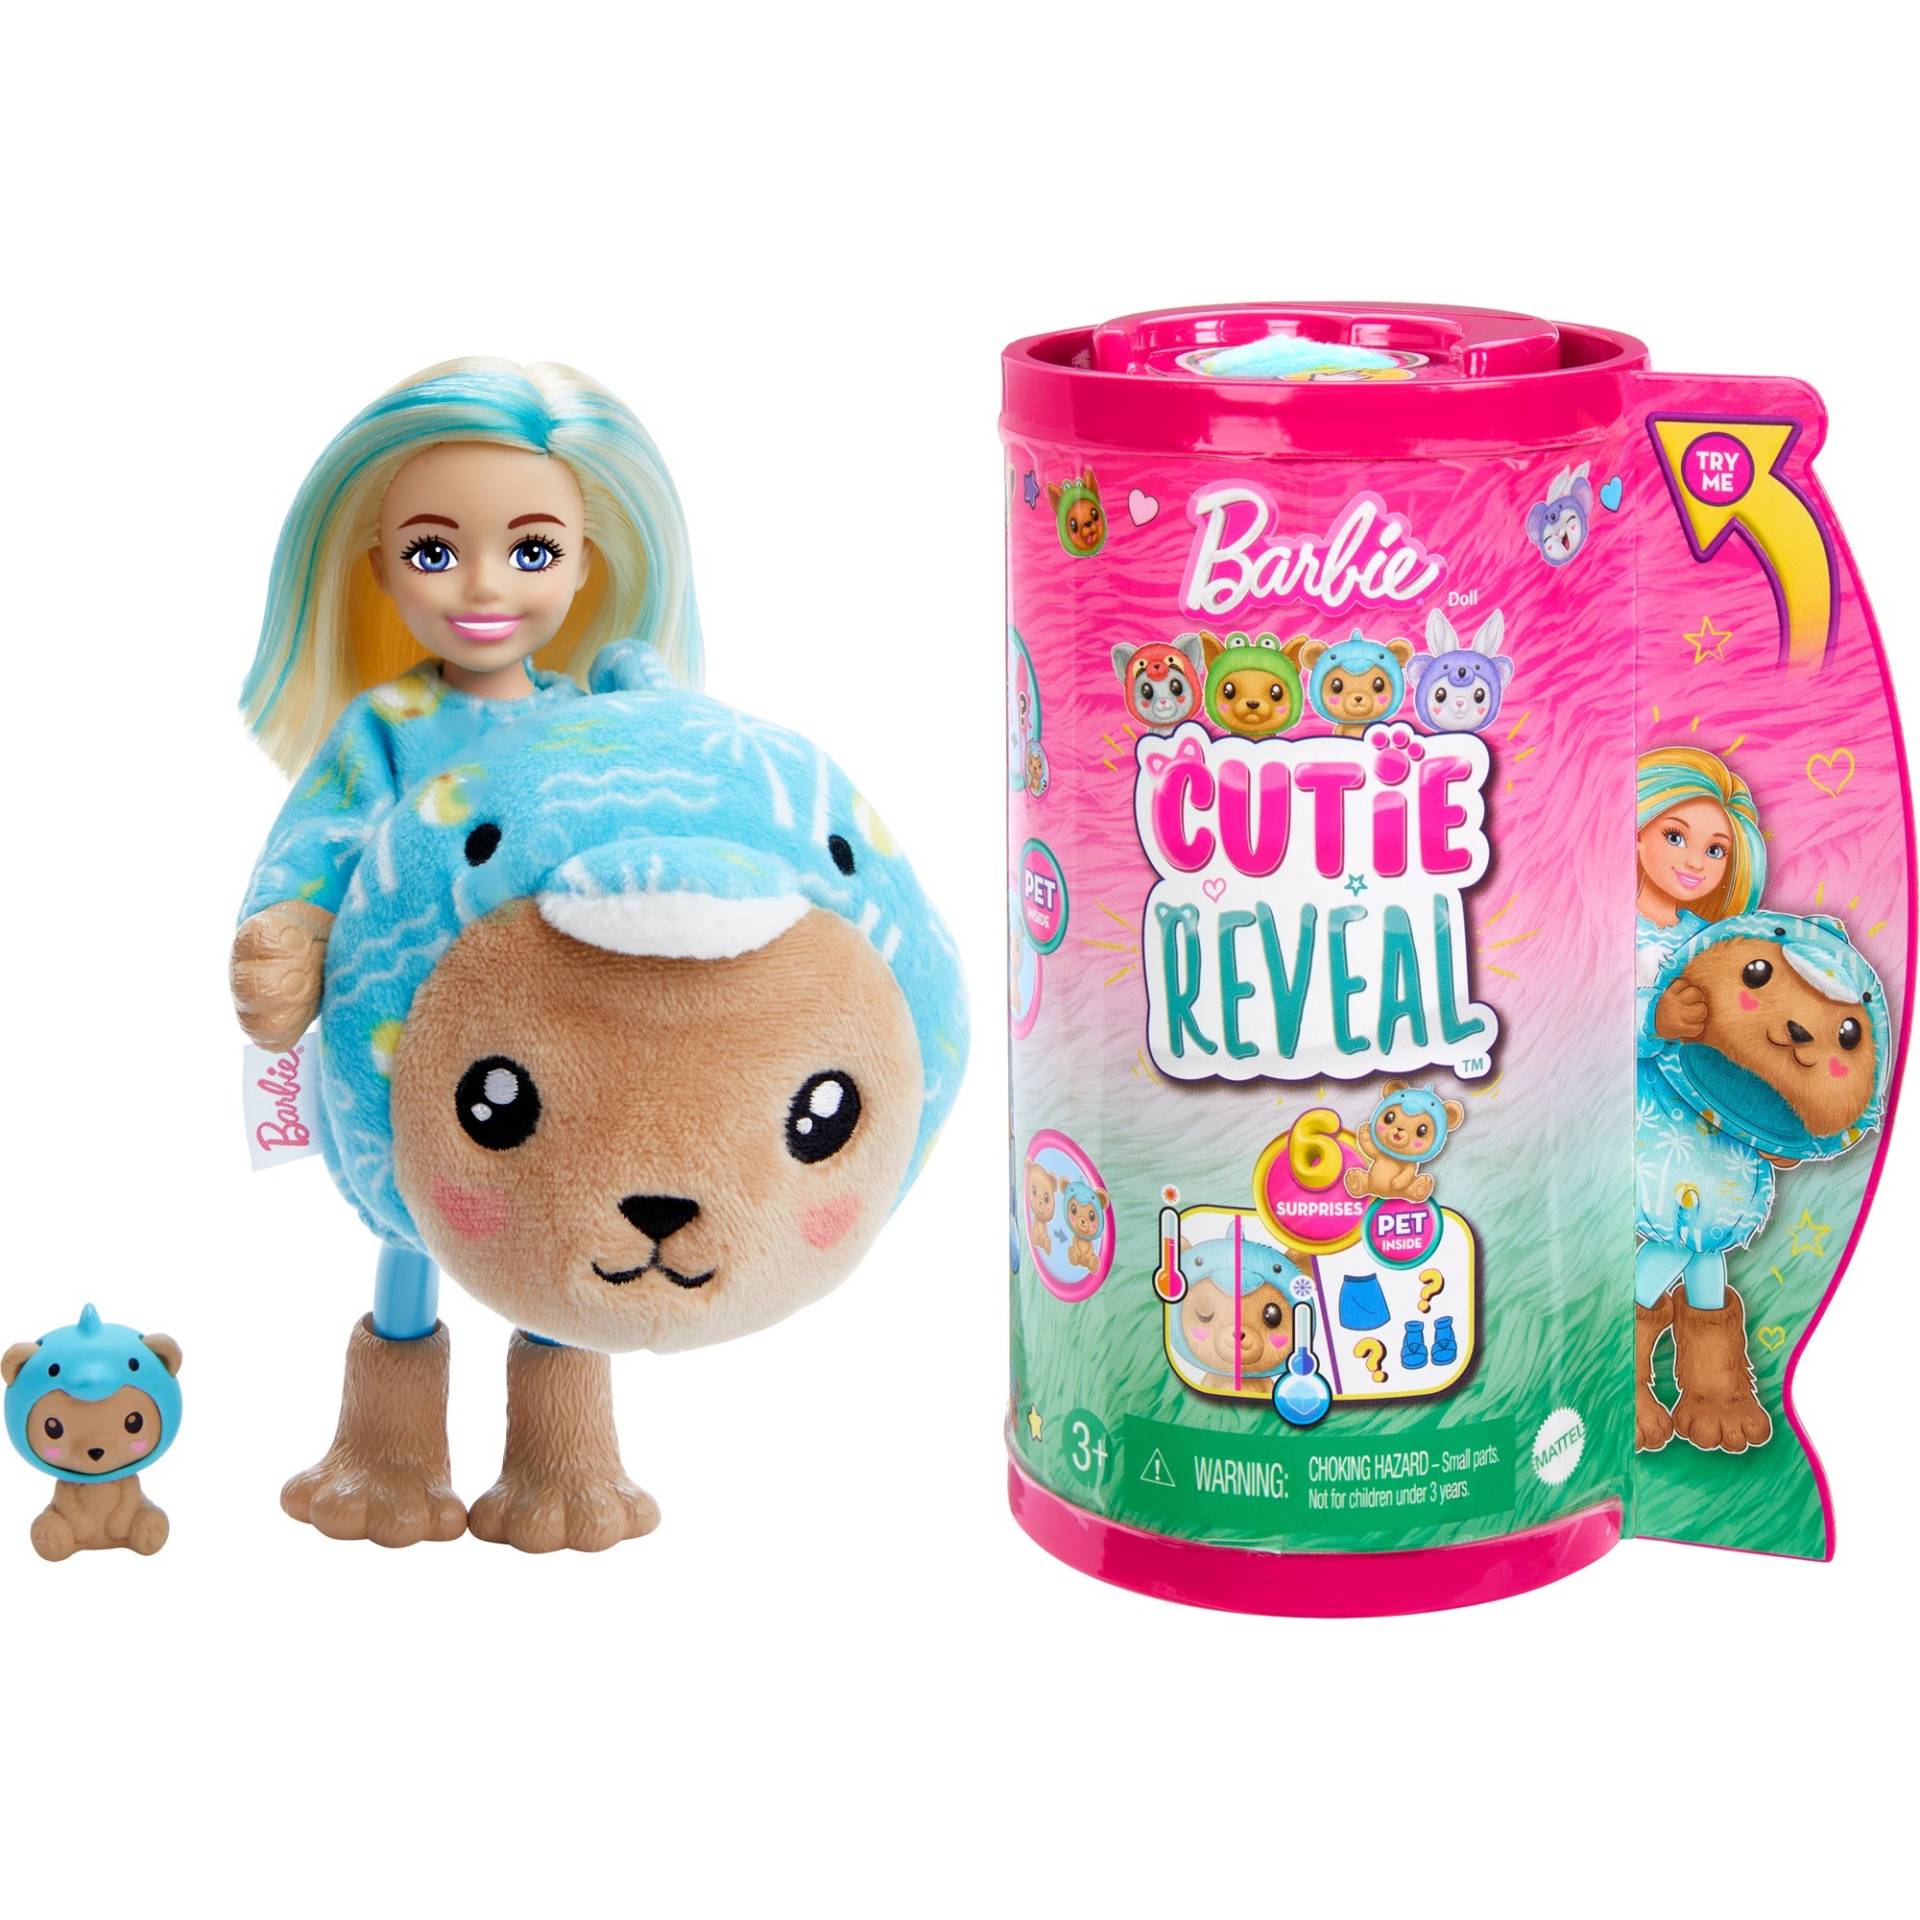 Barbie Cutie Reveal Chelsea Costume Cuties Serie - Teddy Dolphin, Puppe von Mattel